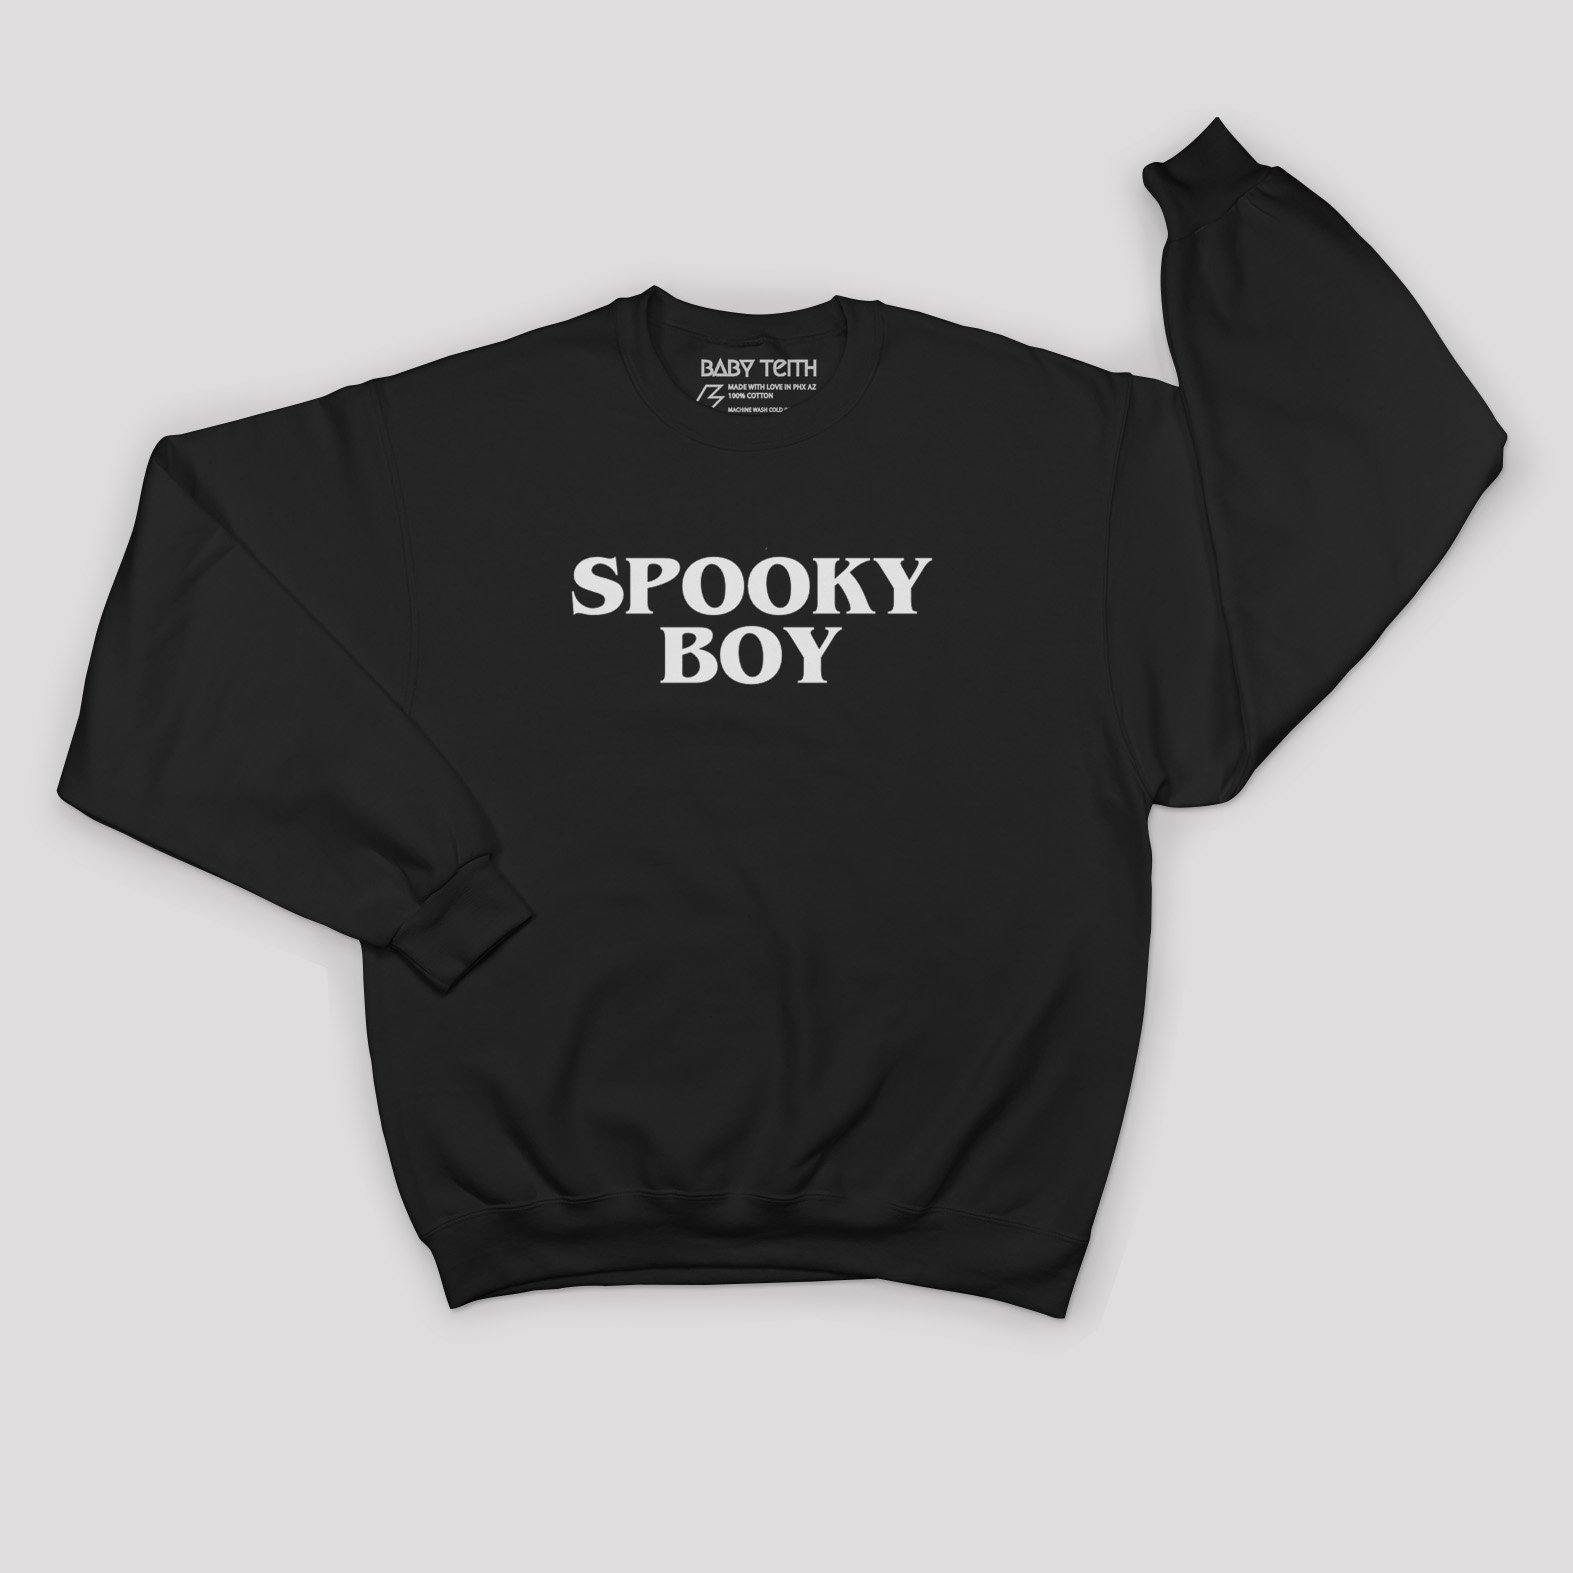 Spooky Boy Sweatshirt for Kids - Baby Teith